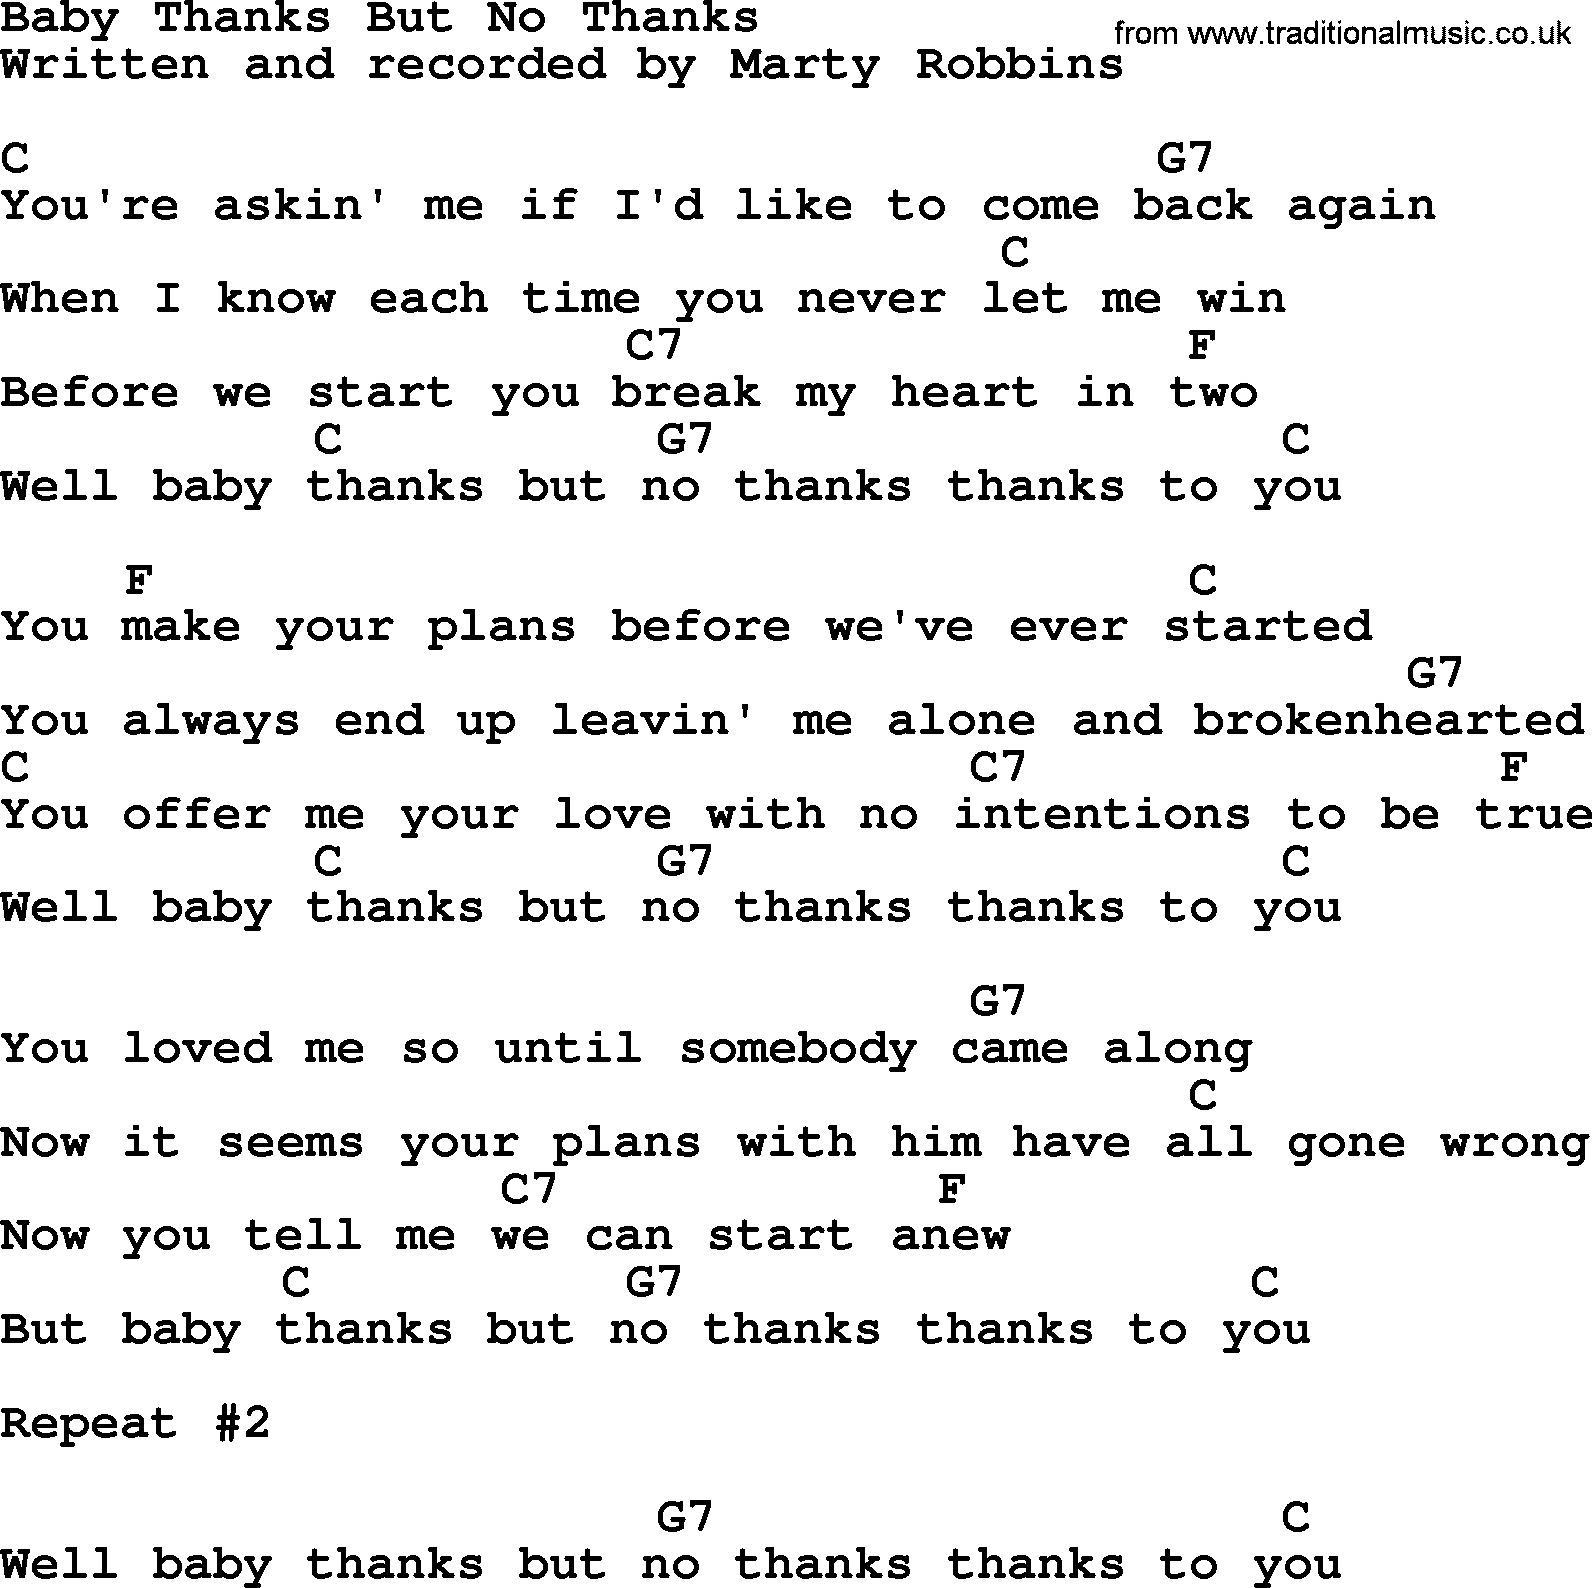 Marty Robbins song: Baby Thanks But No Thanks, lyrics and chords